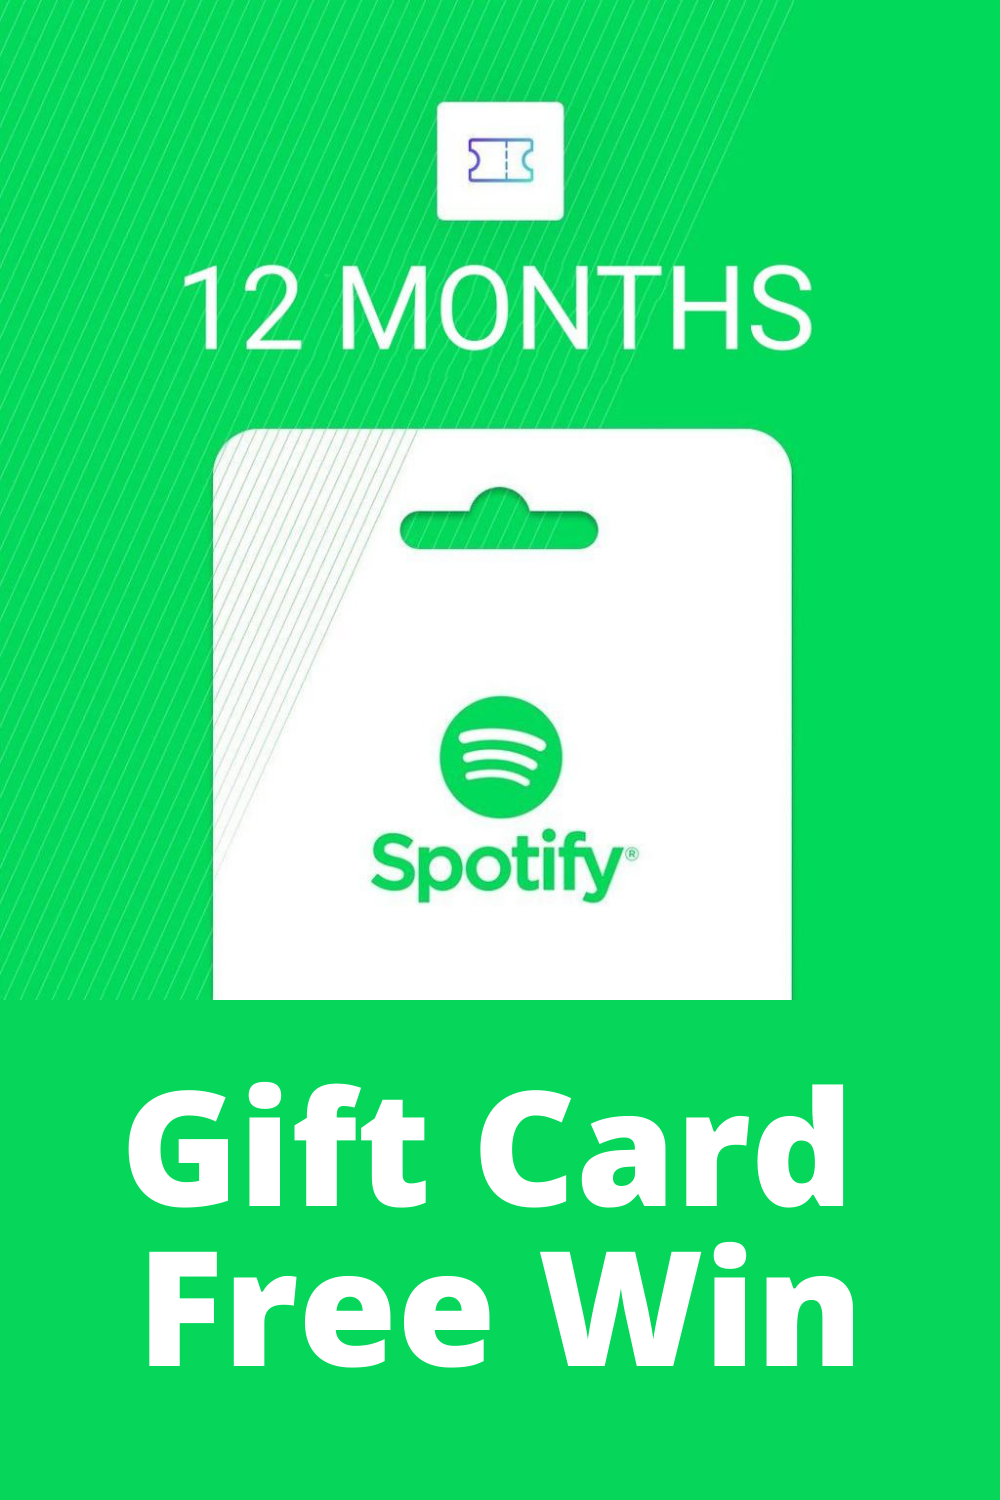 Gift Card balance? - The Spotify Community